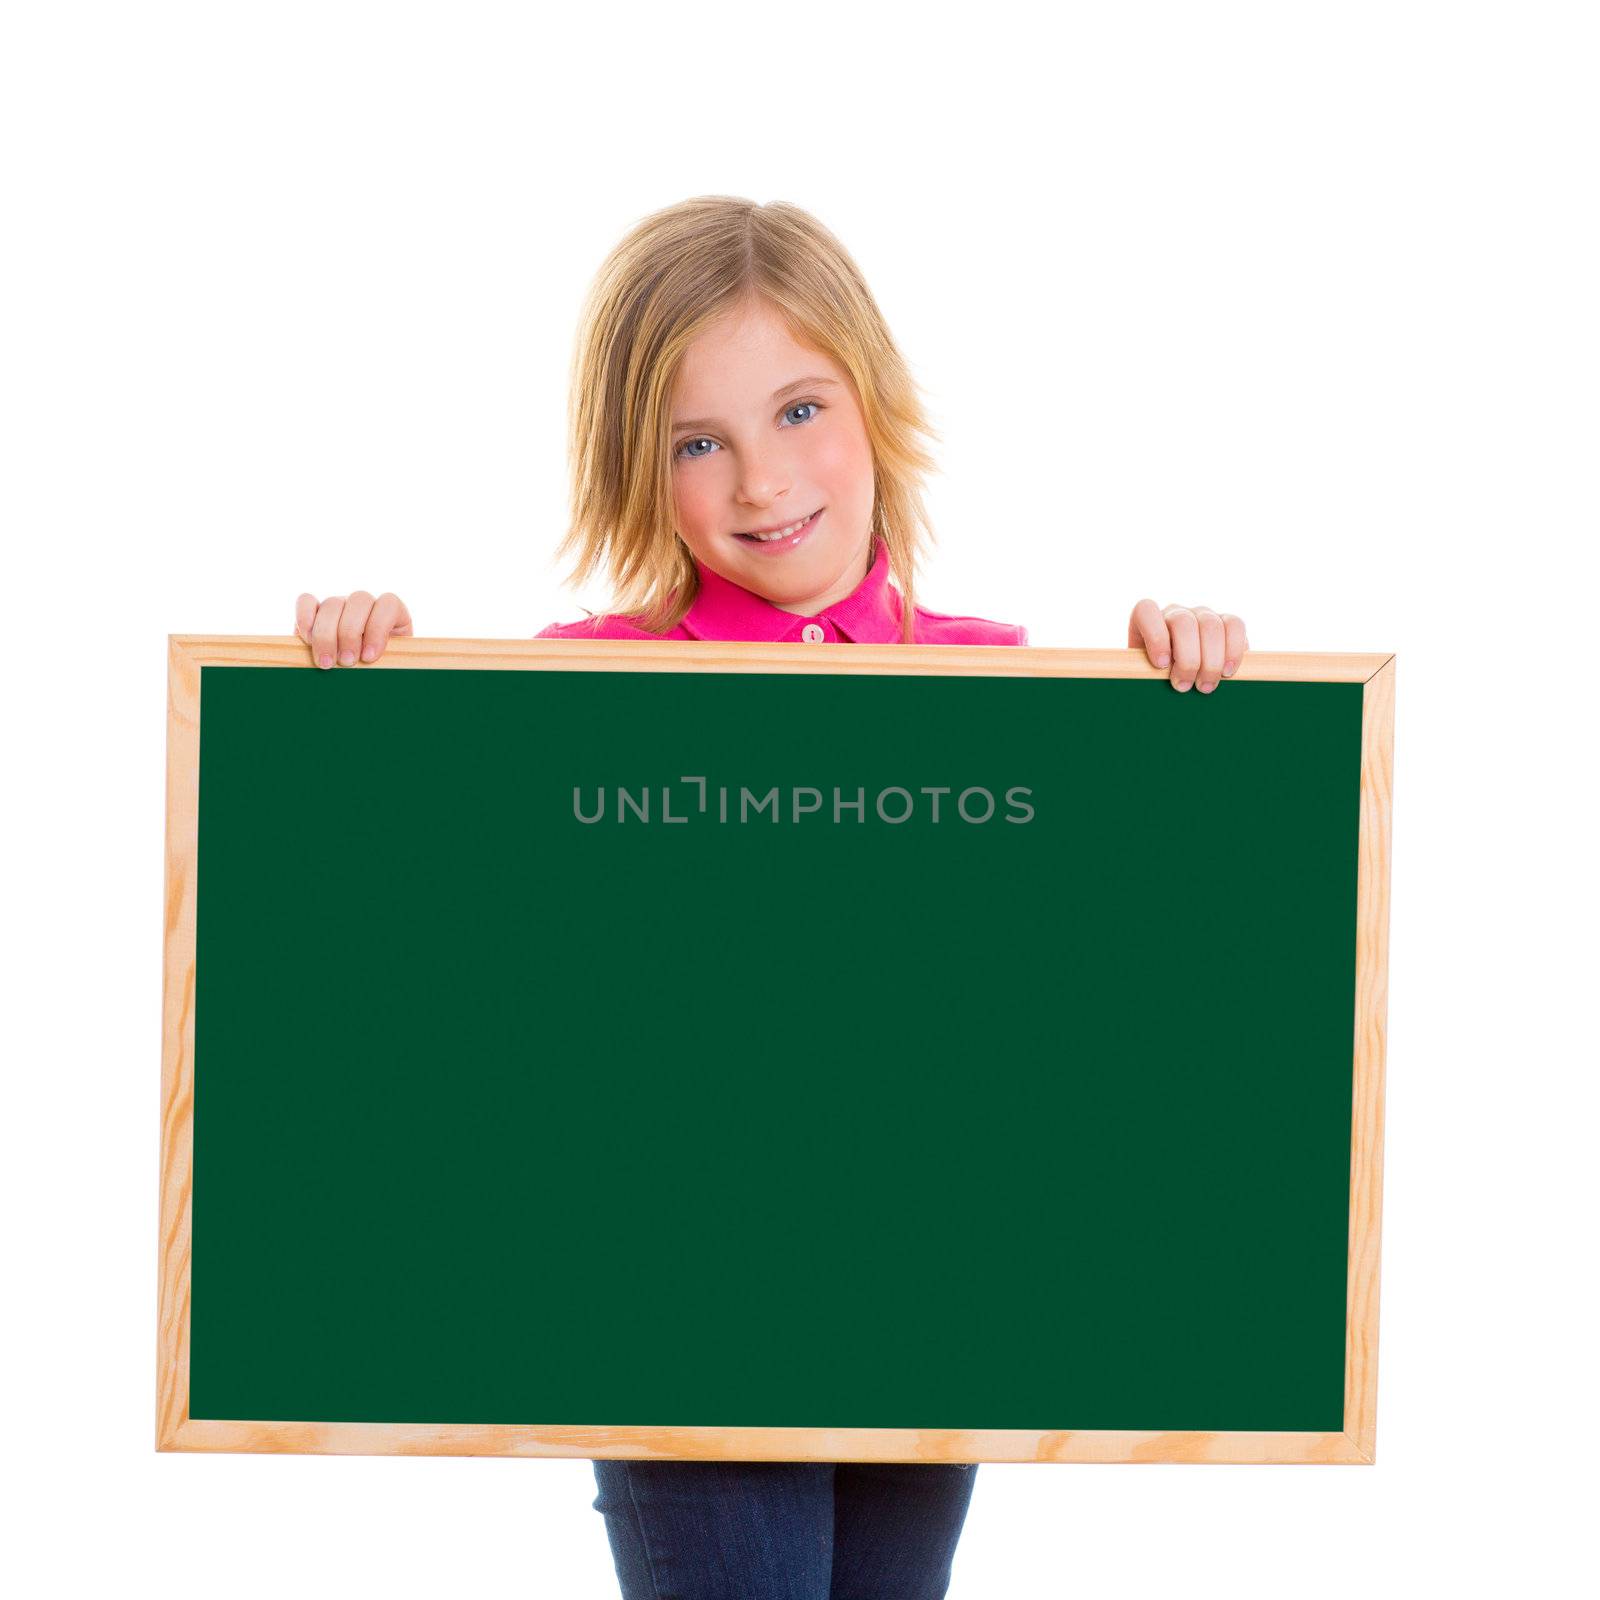 blond child kid happy girl holding blank green blackboard copy space on white